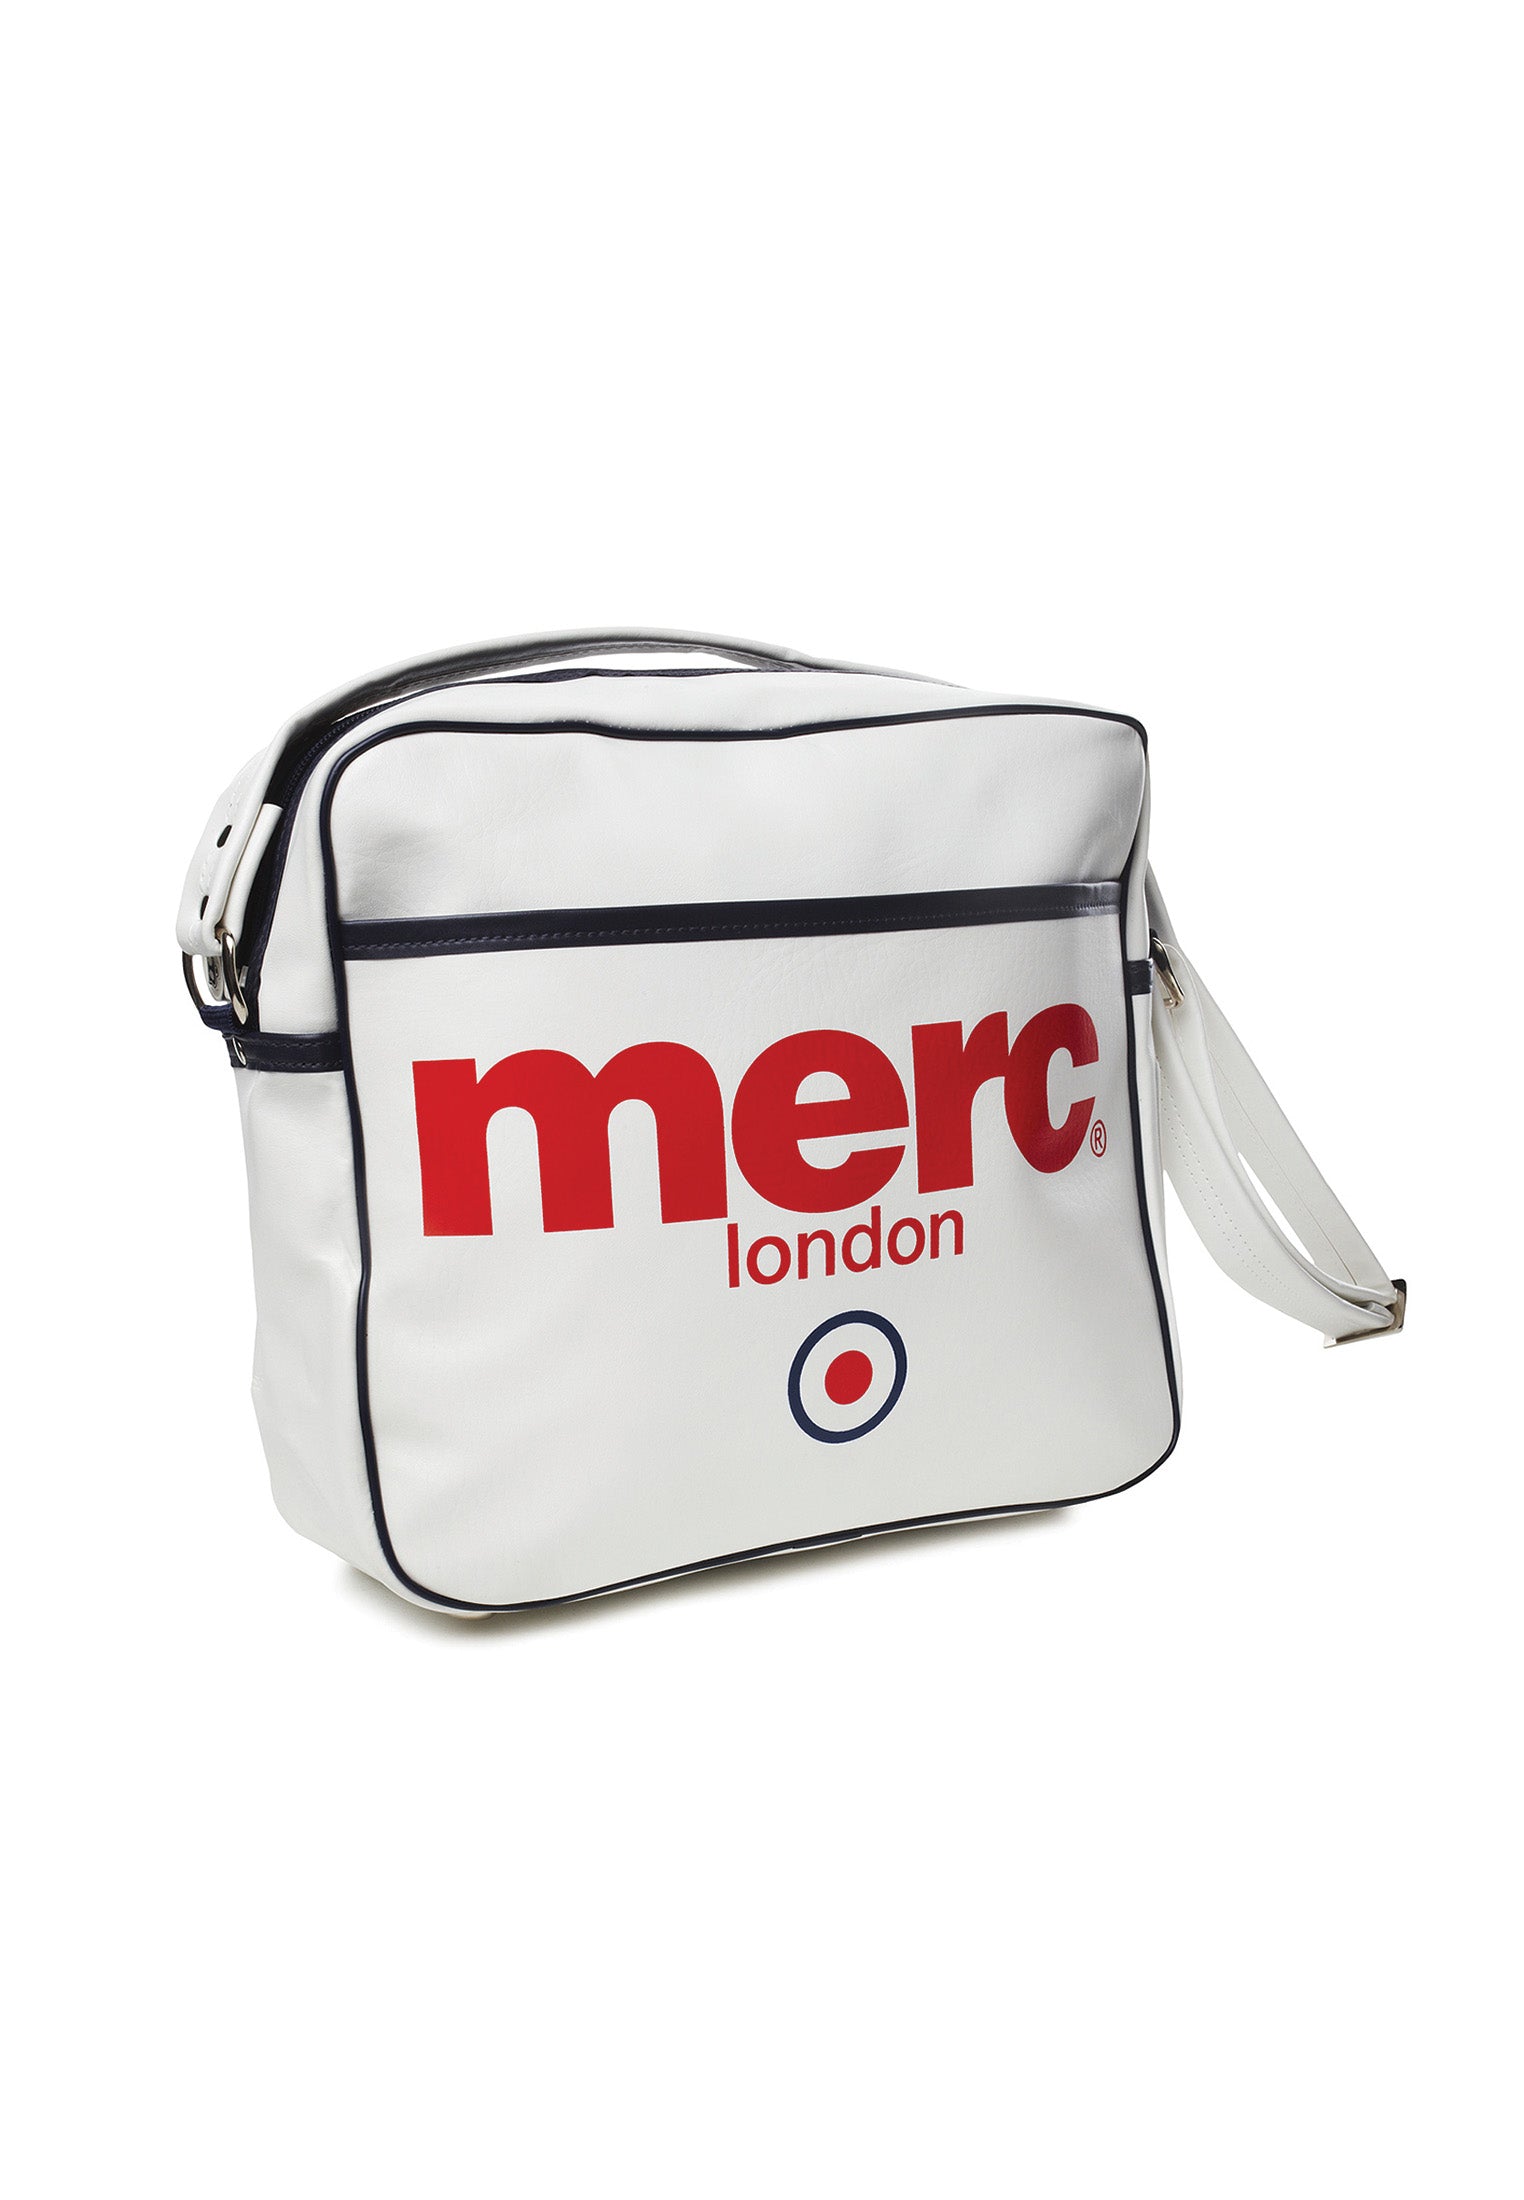 Airline Bag - Merc London